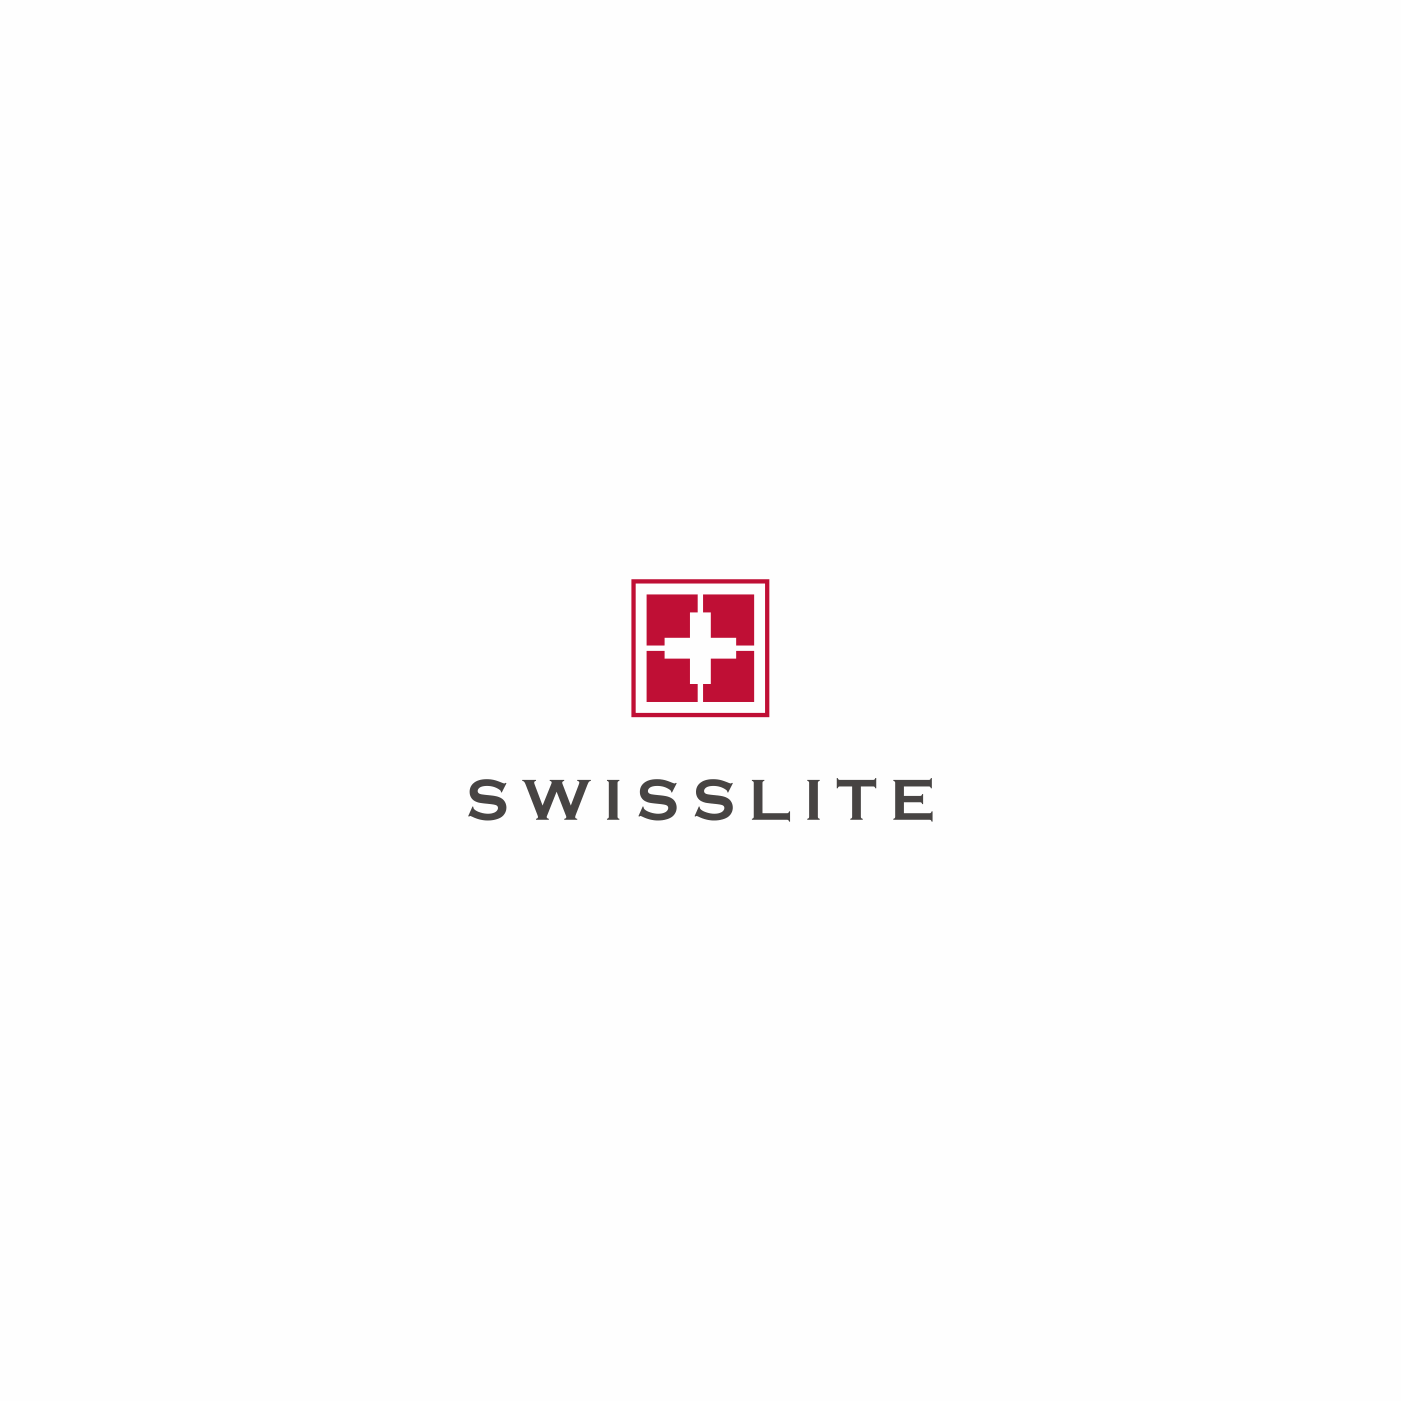 Swiss Flag Logo - Traditional, Upmarket, Business Logo Design for SwissLite with a